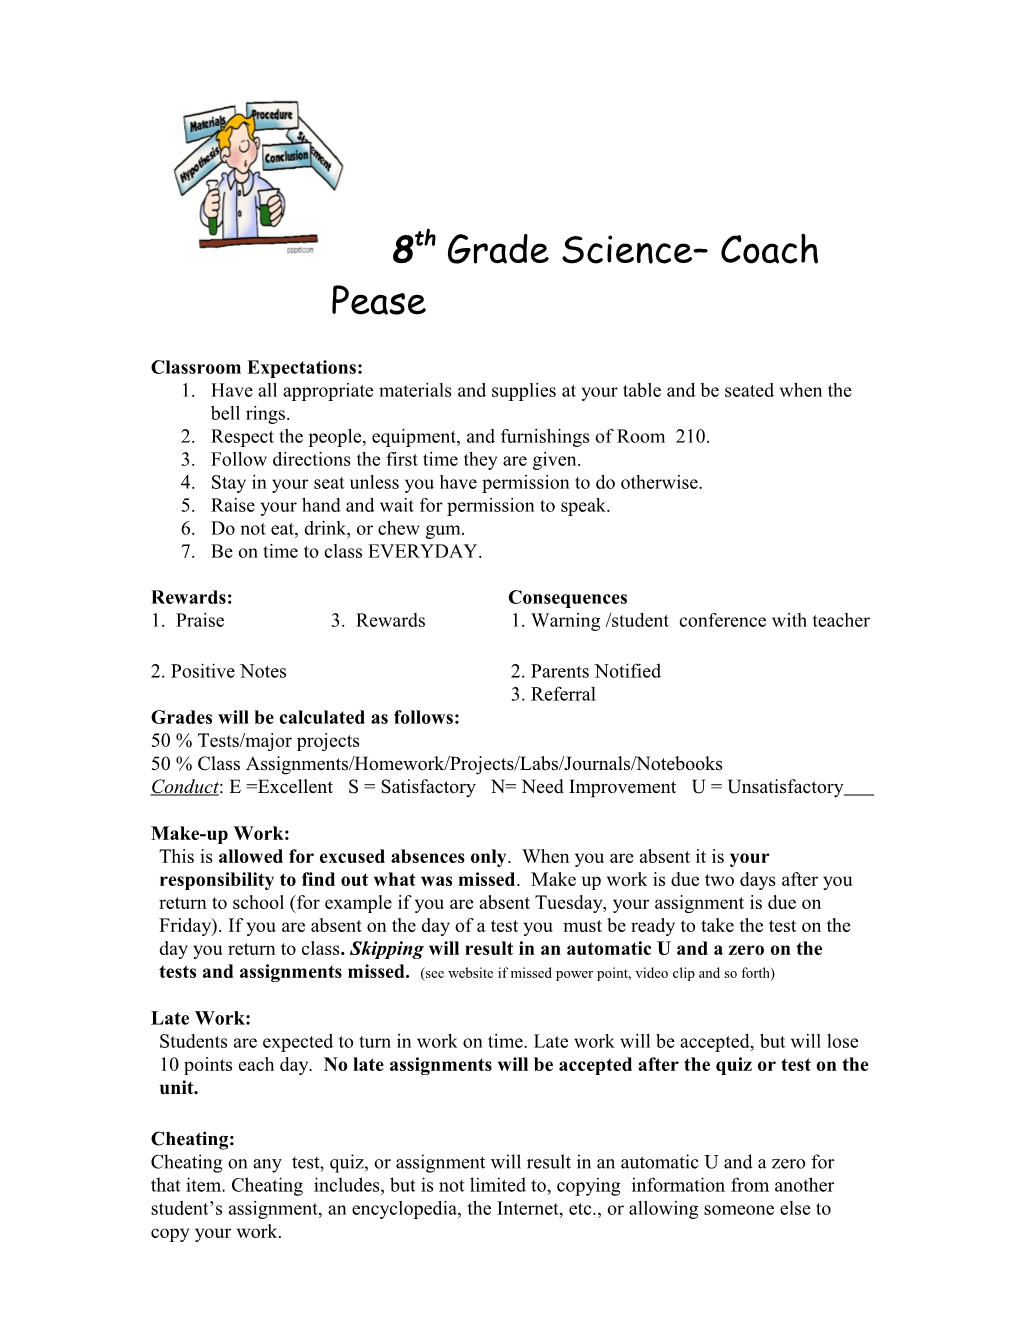 8Th Grade Science Coach Pease